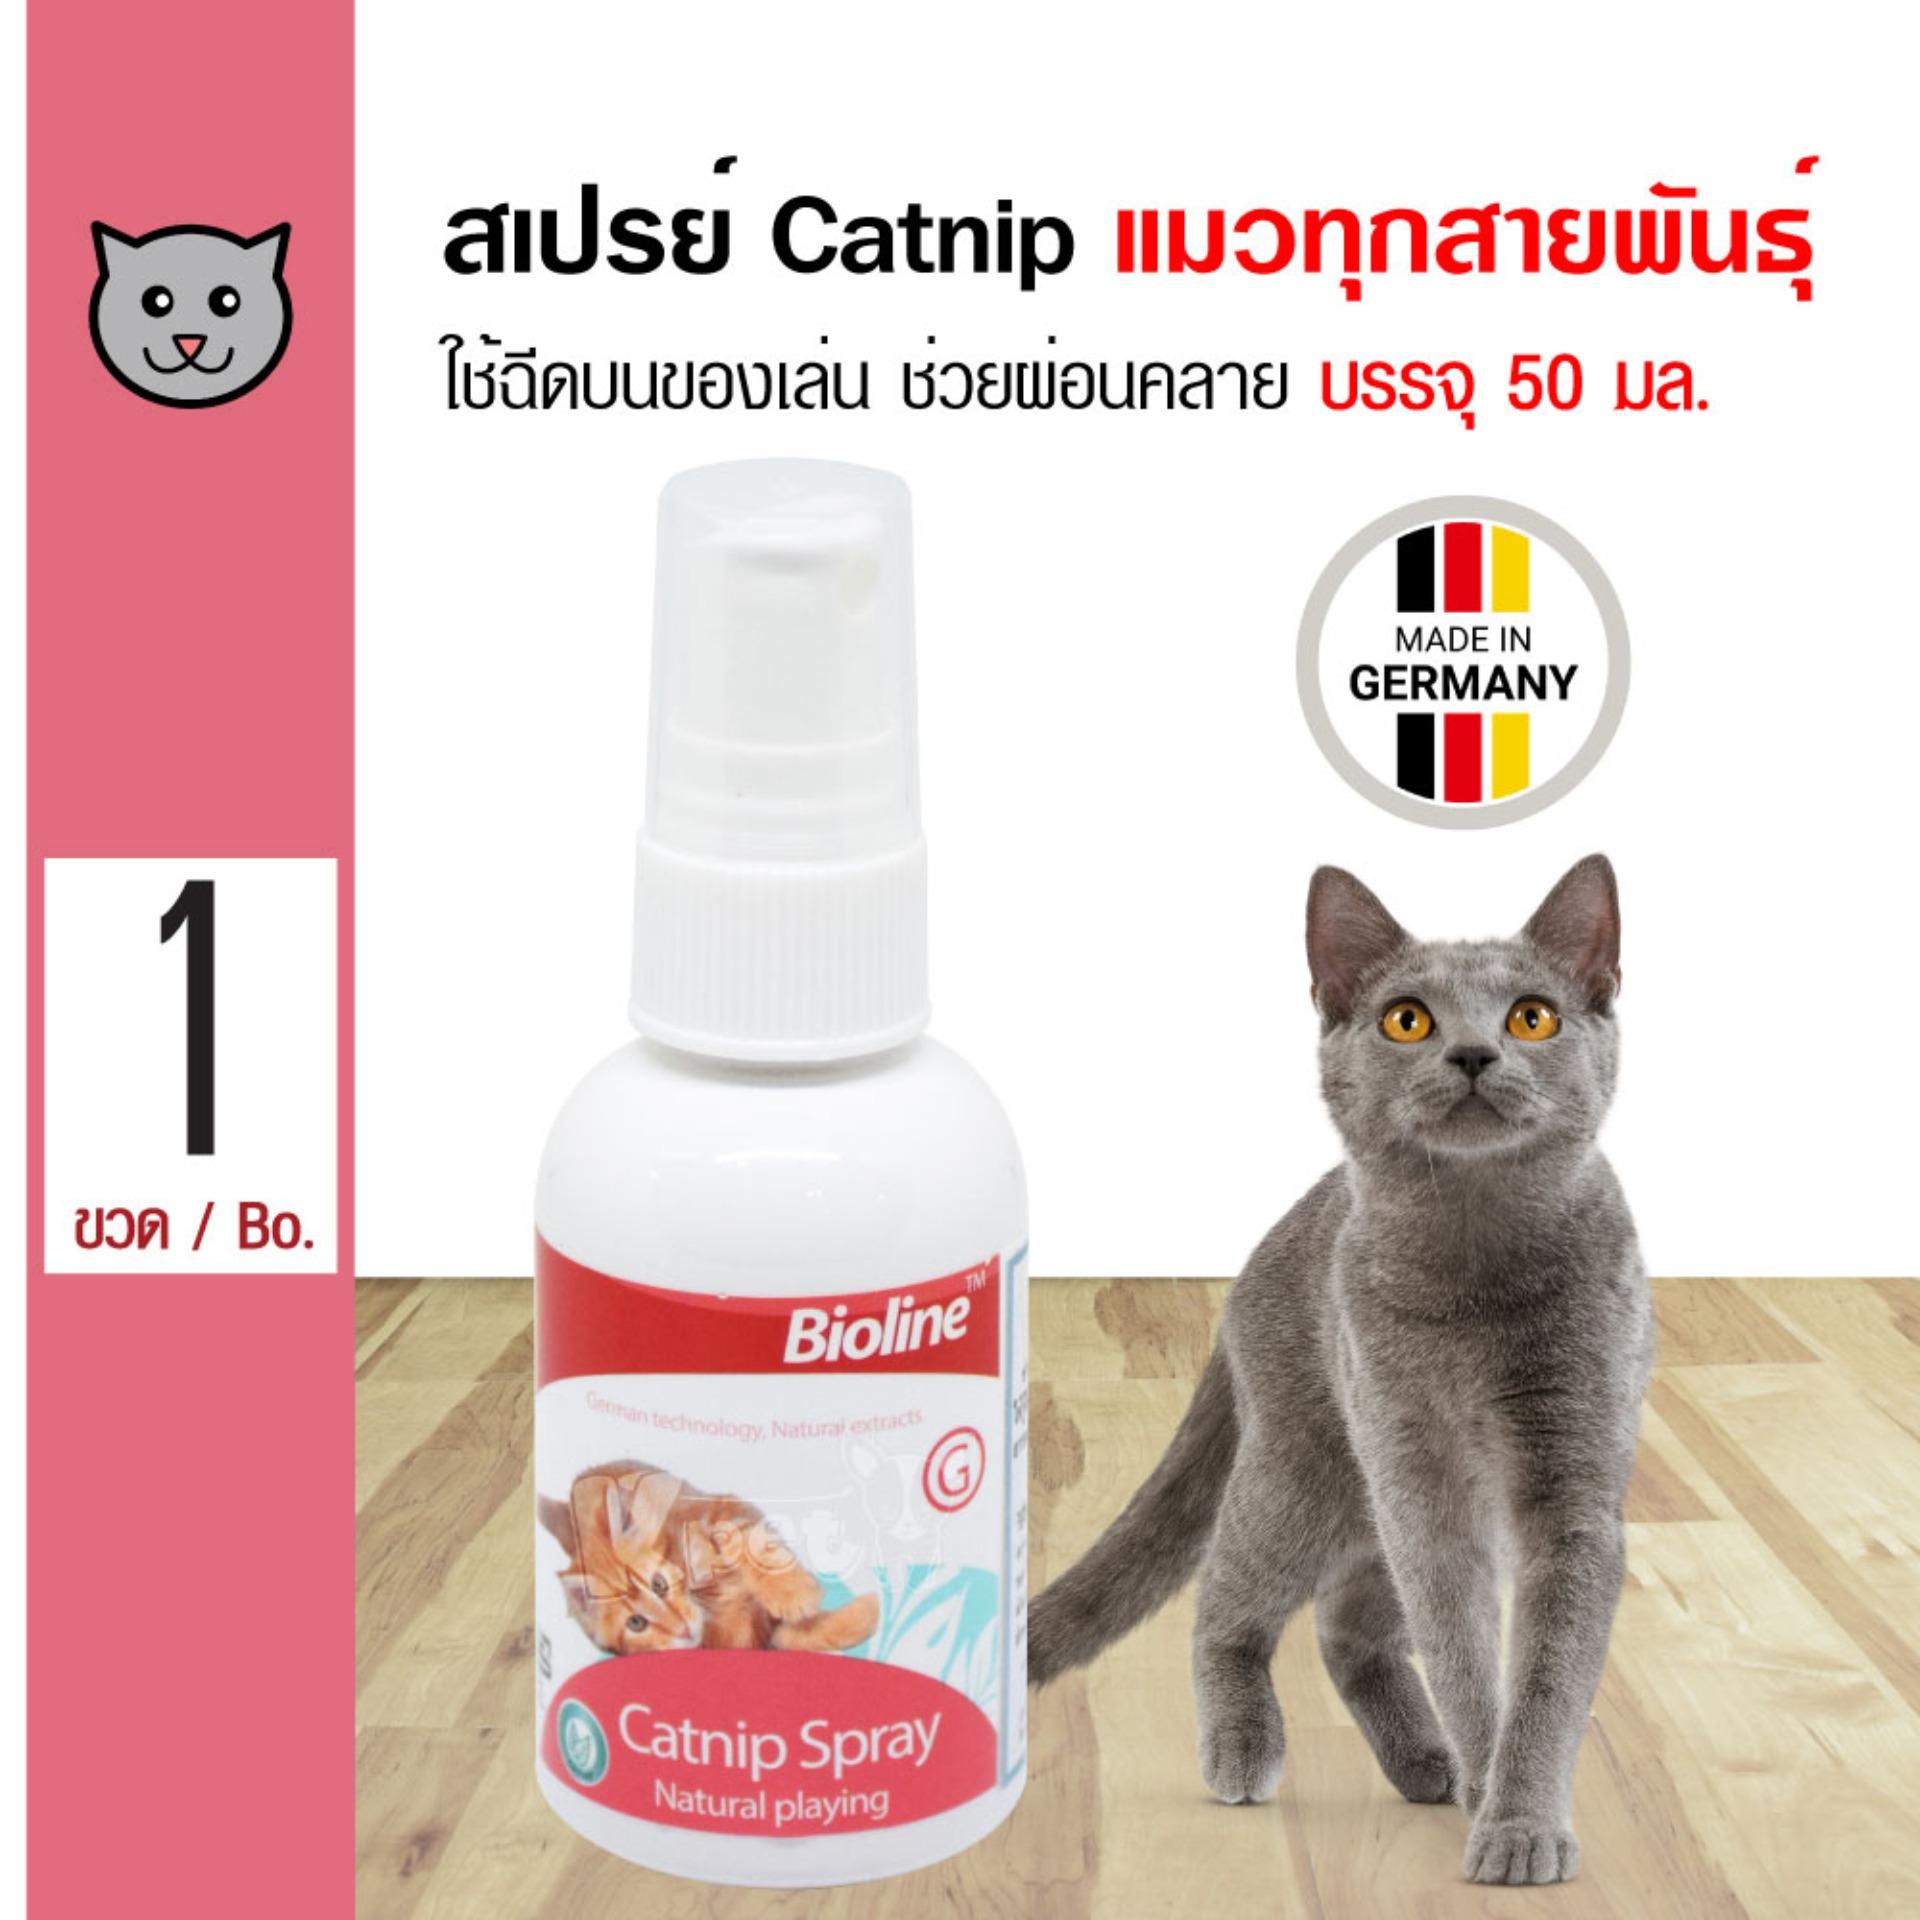 Bioline Catnip Spray ของเล่นแมว ขนมแมว สเปรย์แคทนิป กัญชาแมว ใช้ฉีดบนของเล่น ผ่อนคลาย สำหรับแมว (50 มล./ขวด)